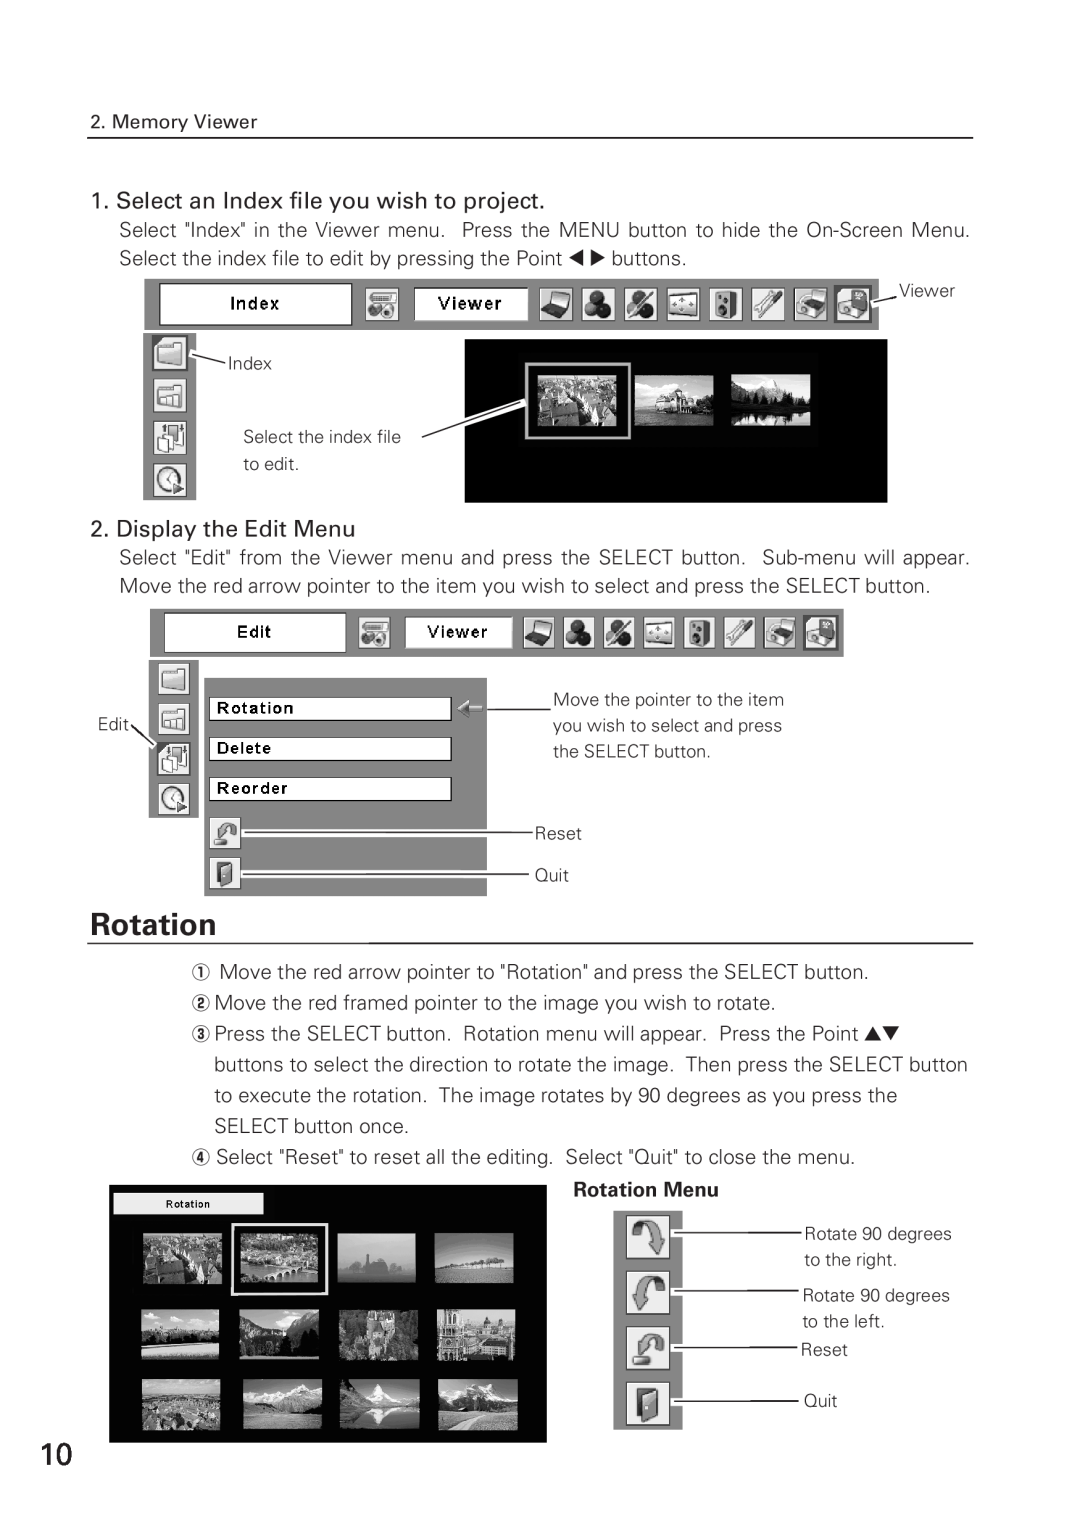 Eiki WL-10 owner manual Select an Index file you wish to project, Display the Edit Menu, Rotation Menu 